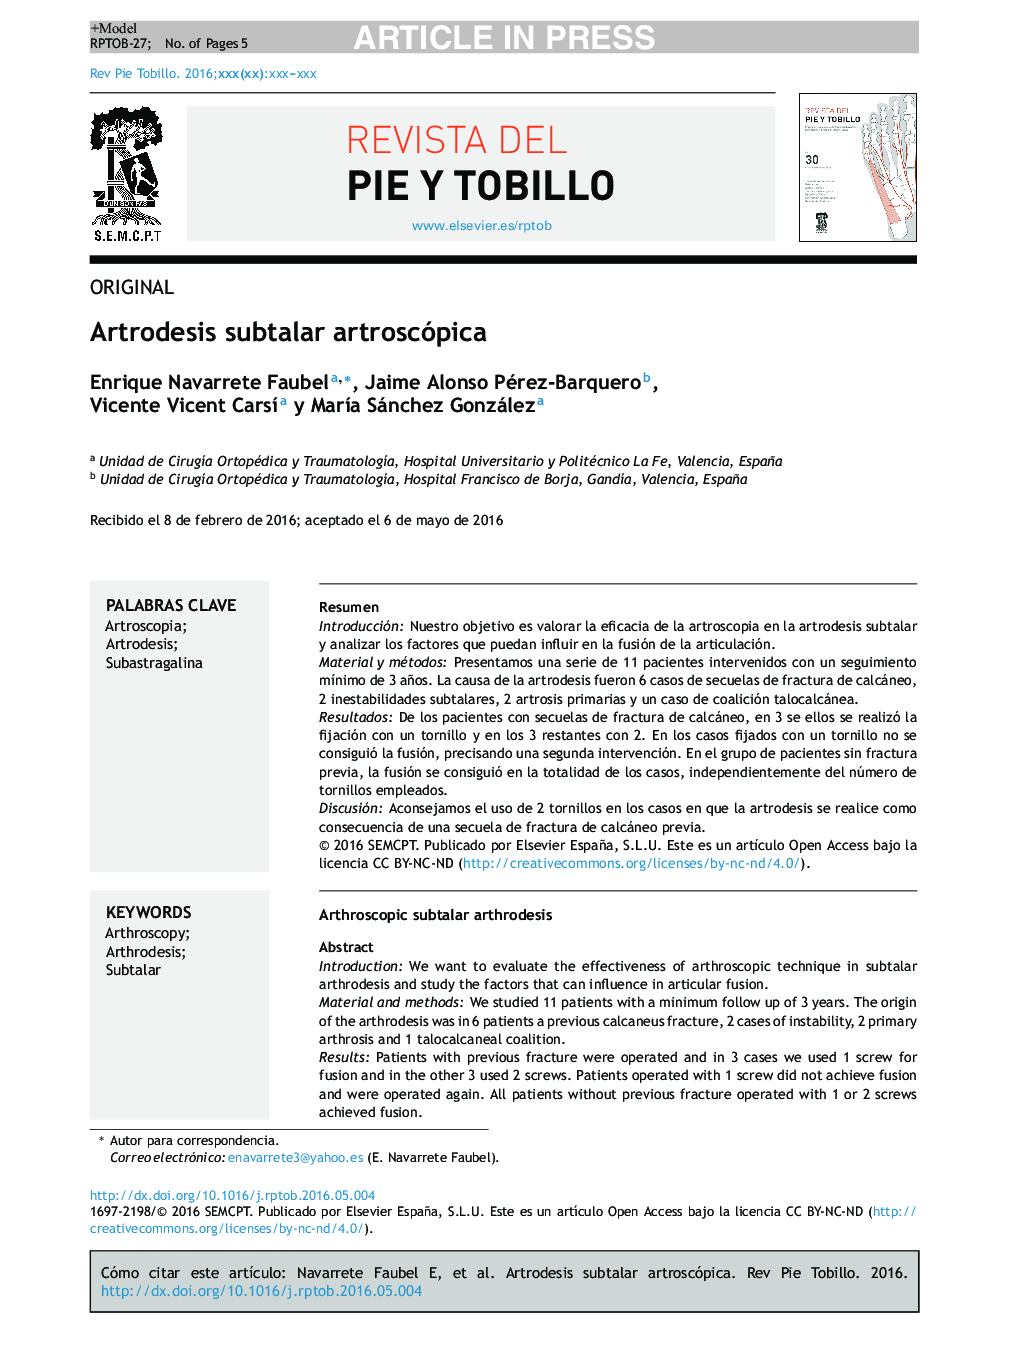 Artrodesis subtalar artroscópica